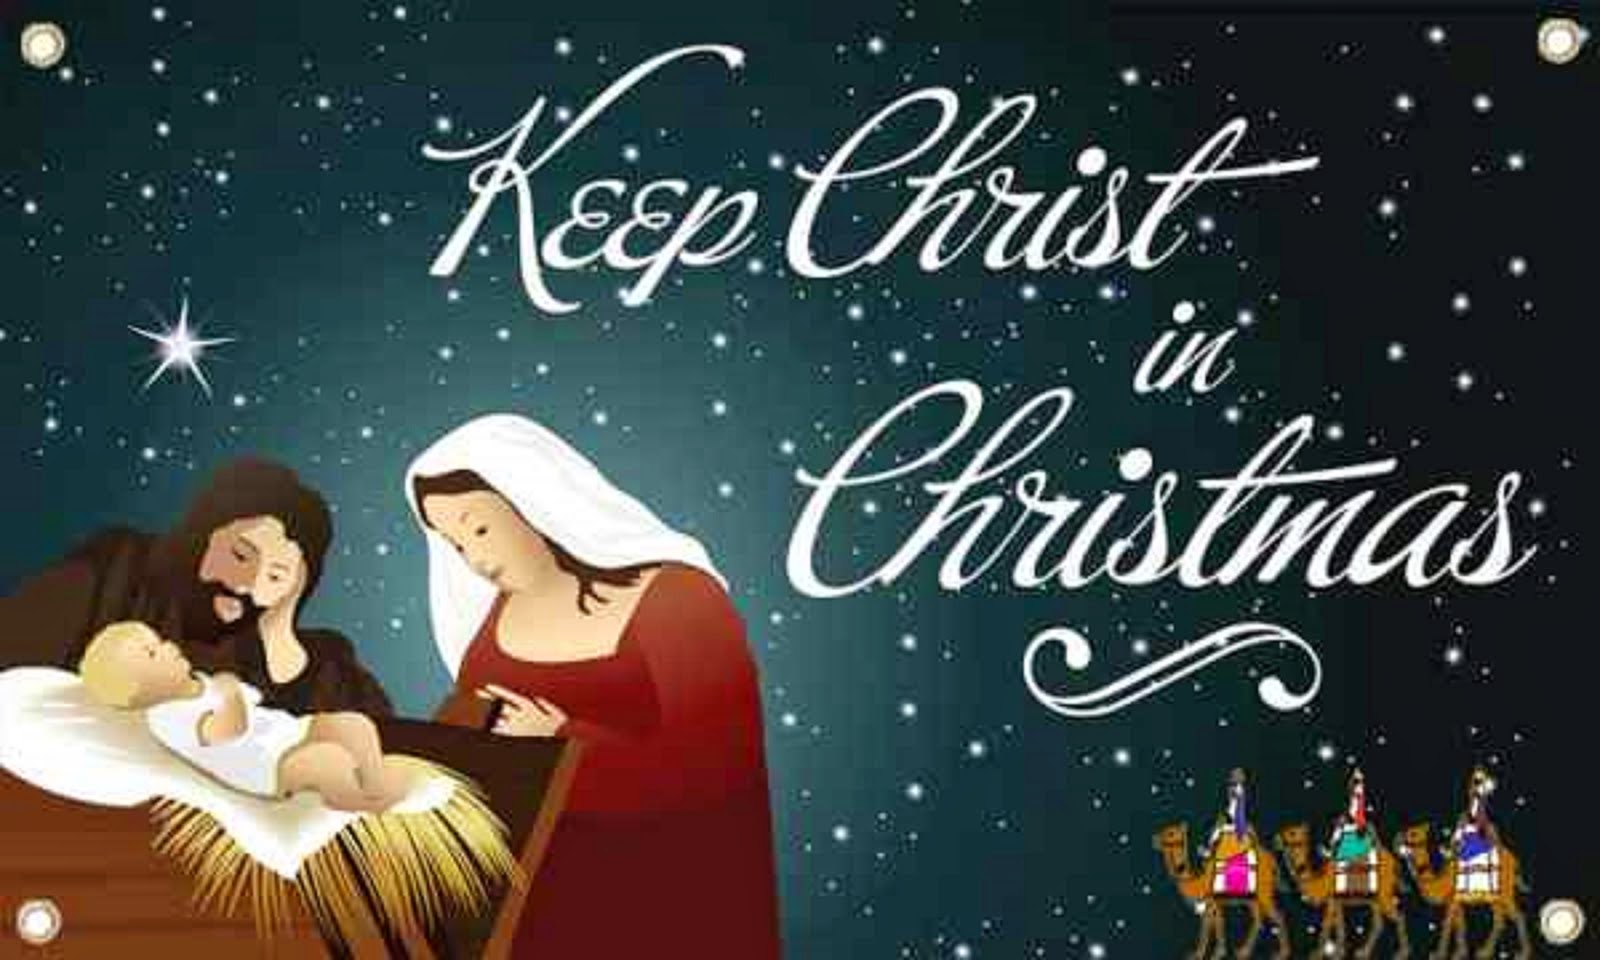 HELP: KEEP CHRIST IN CHRISTMAS